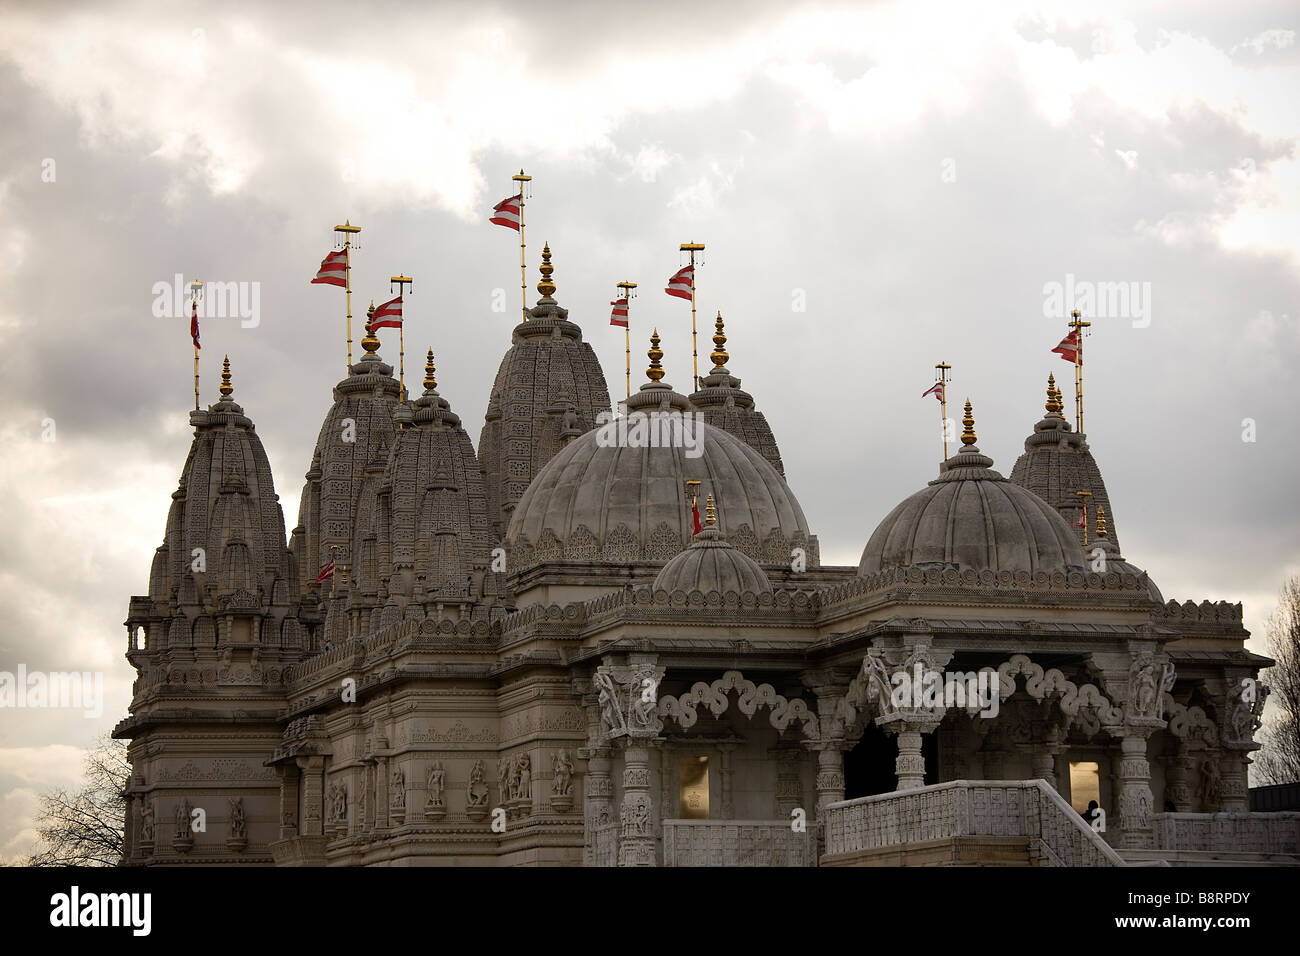 Flags and dome roofs on top of the BAPS Shri Swaminarayan Mandir London Neasden Temple Stock Photo